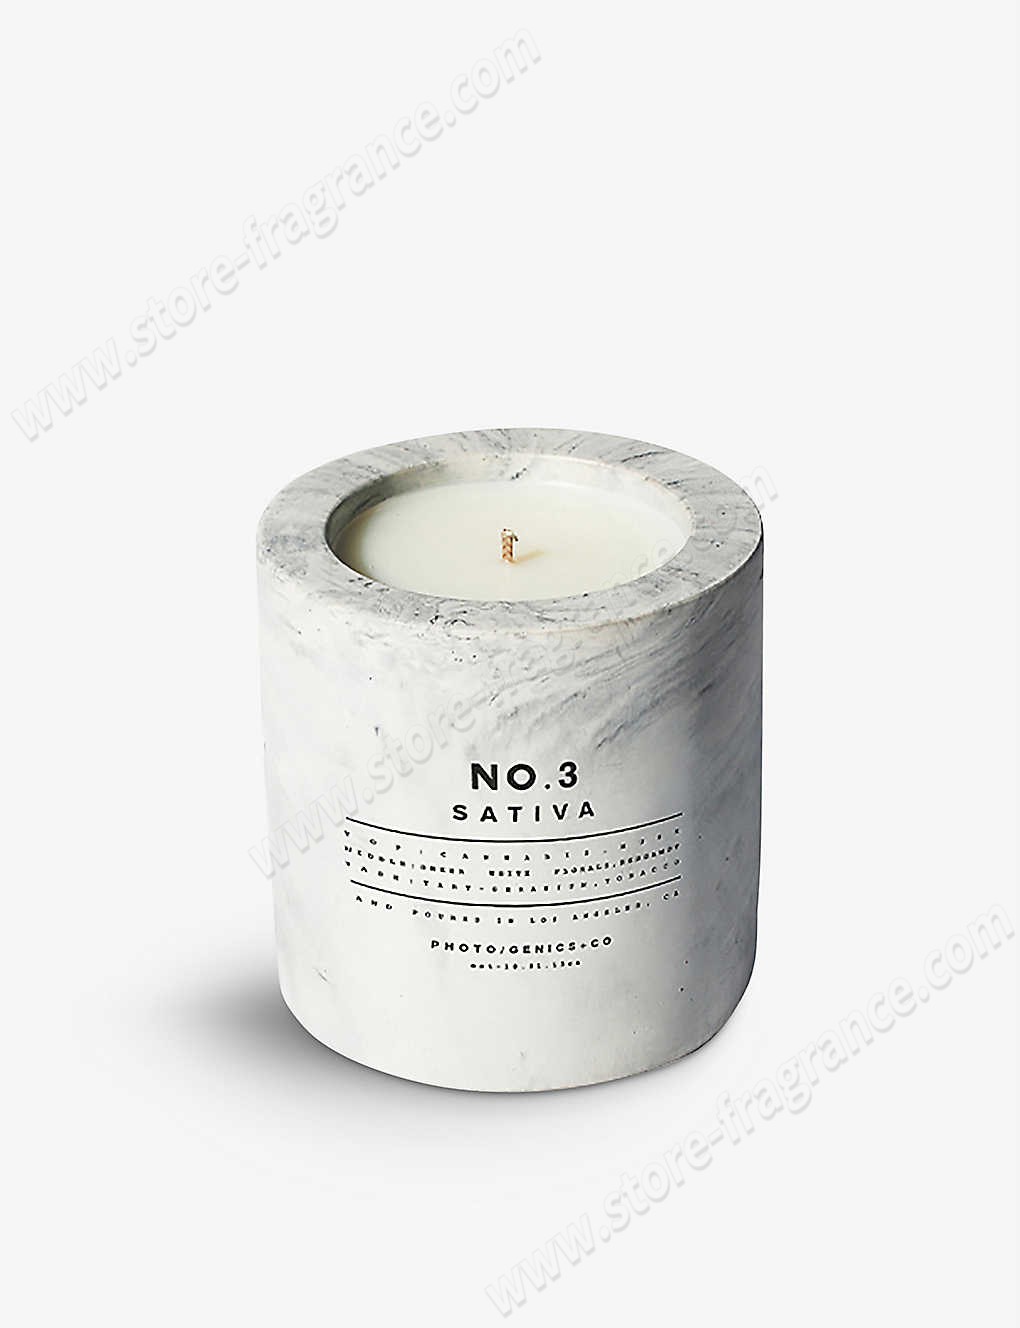 PHOTOGENICS & CO./No. 3 Sativa concrete candle 8oz ✿ Discount Store - -0